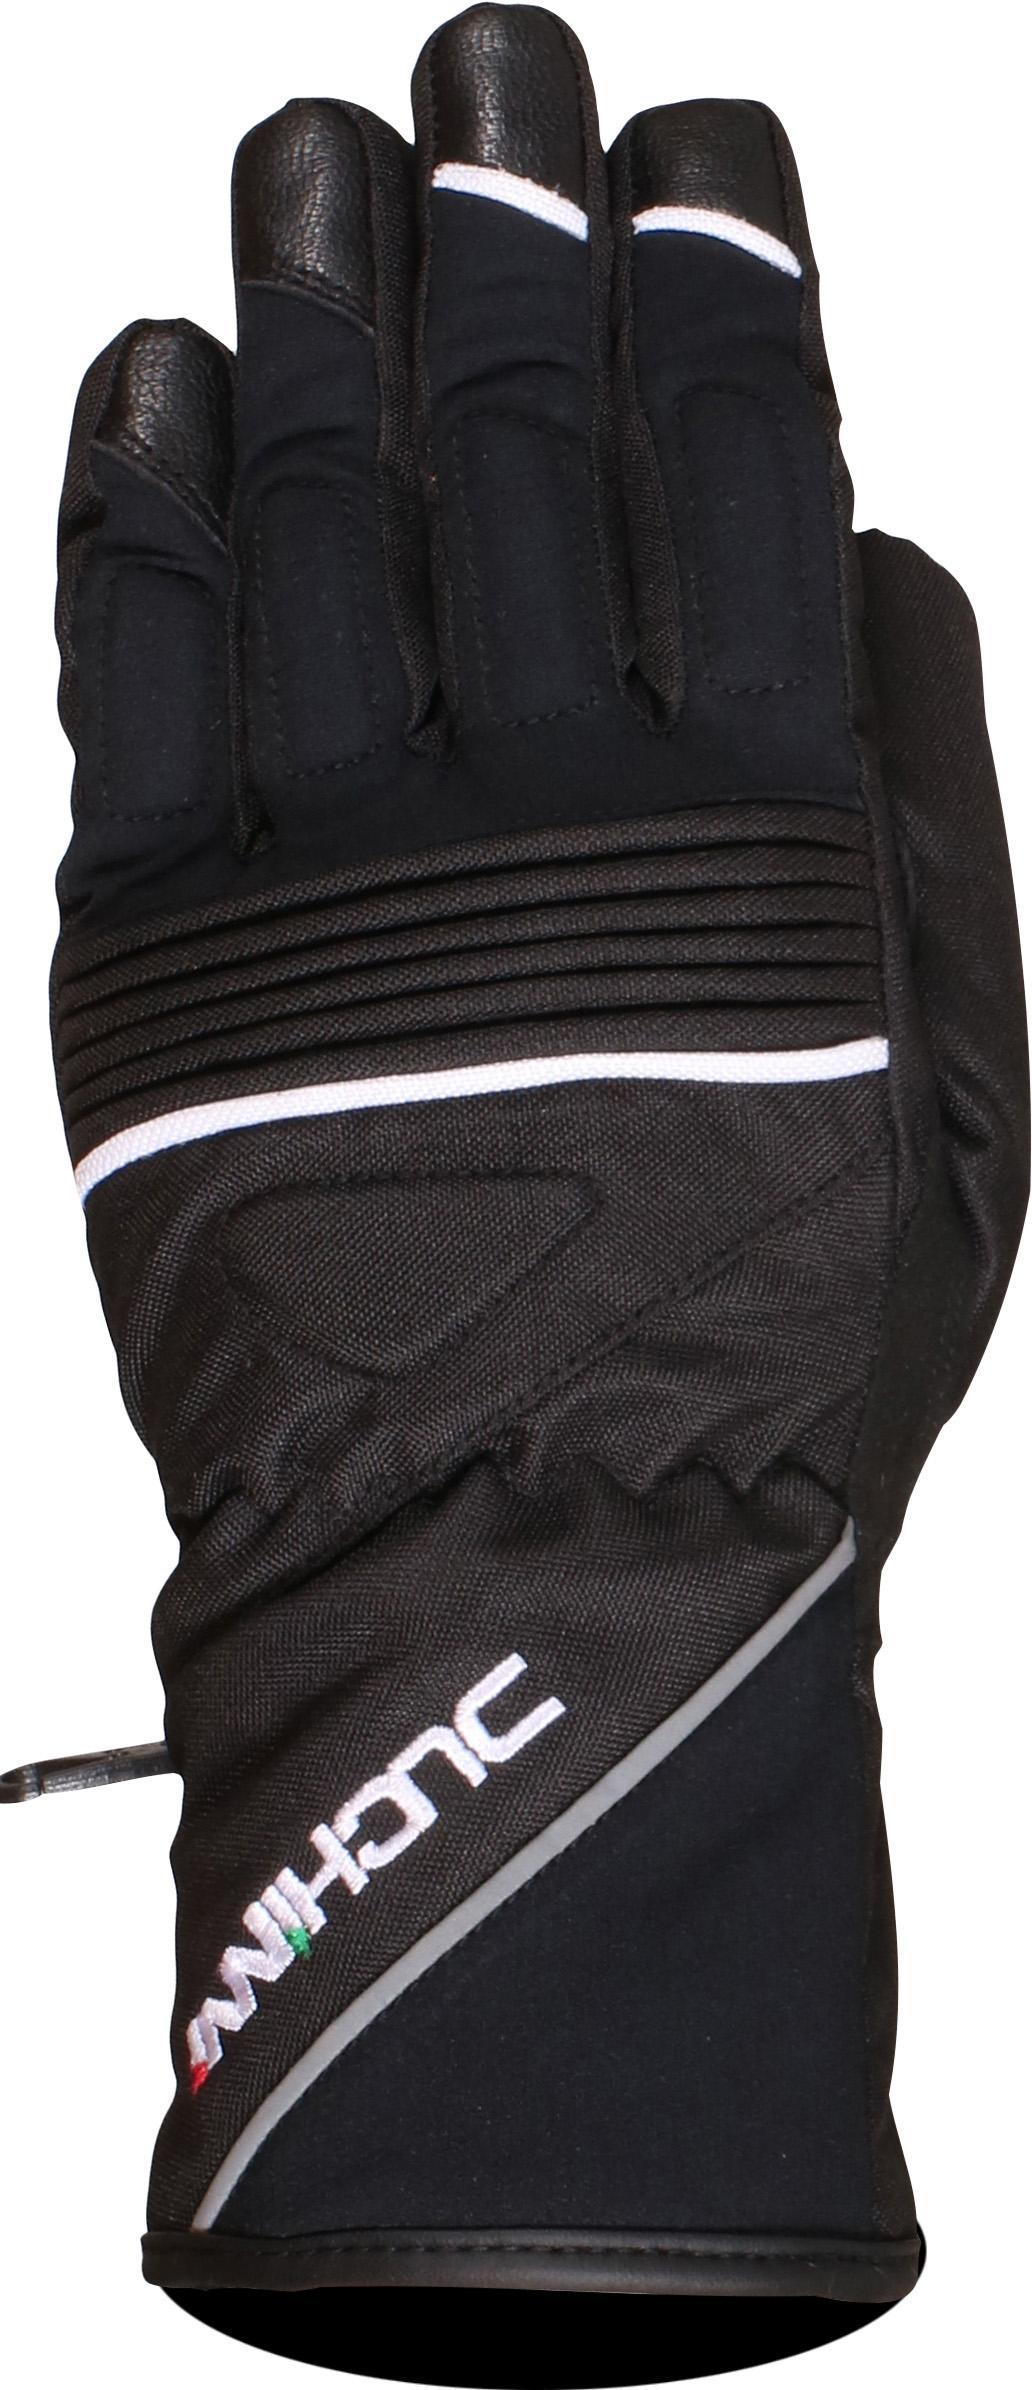 Duchinni Verona Women's Motorcycle Gloves - Black And White, Xl